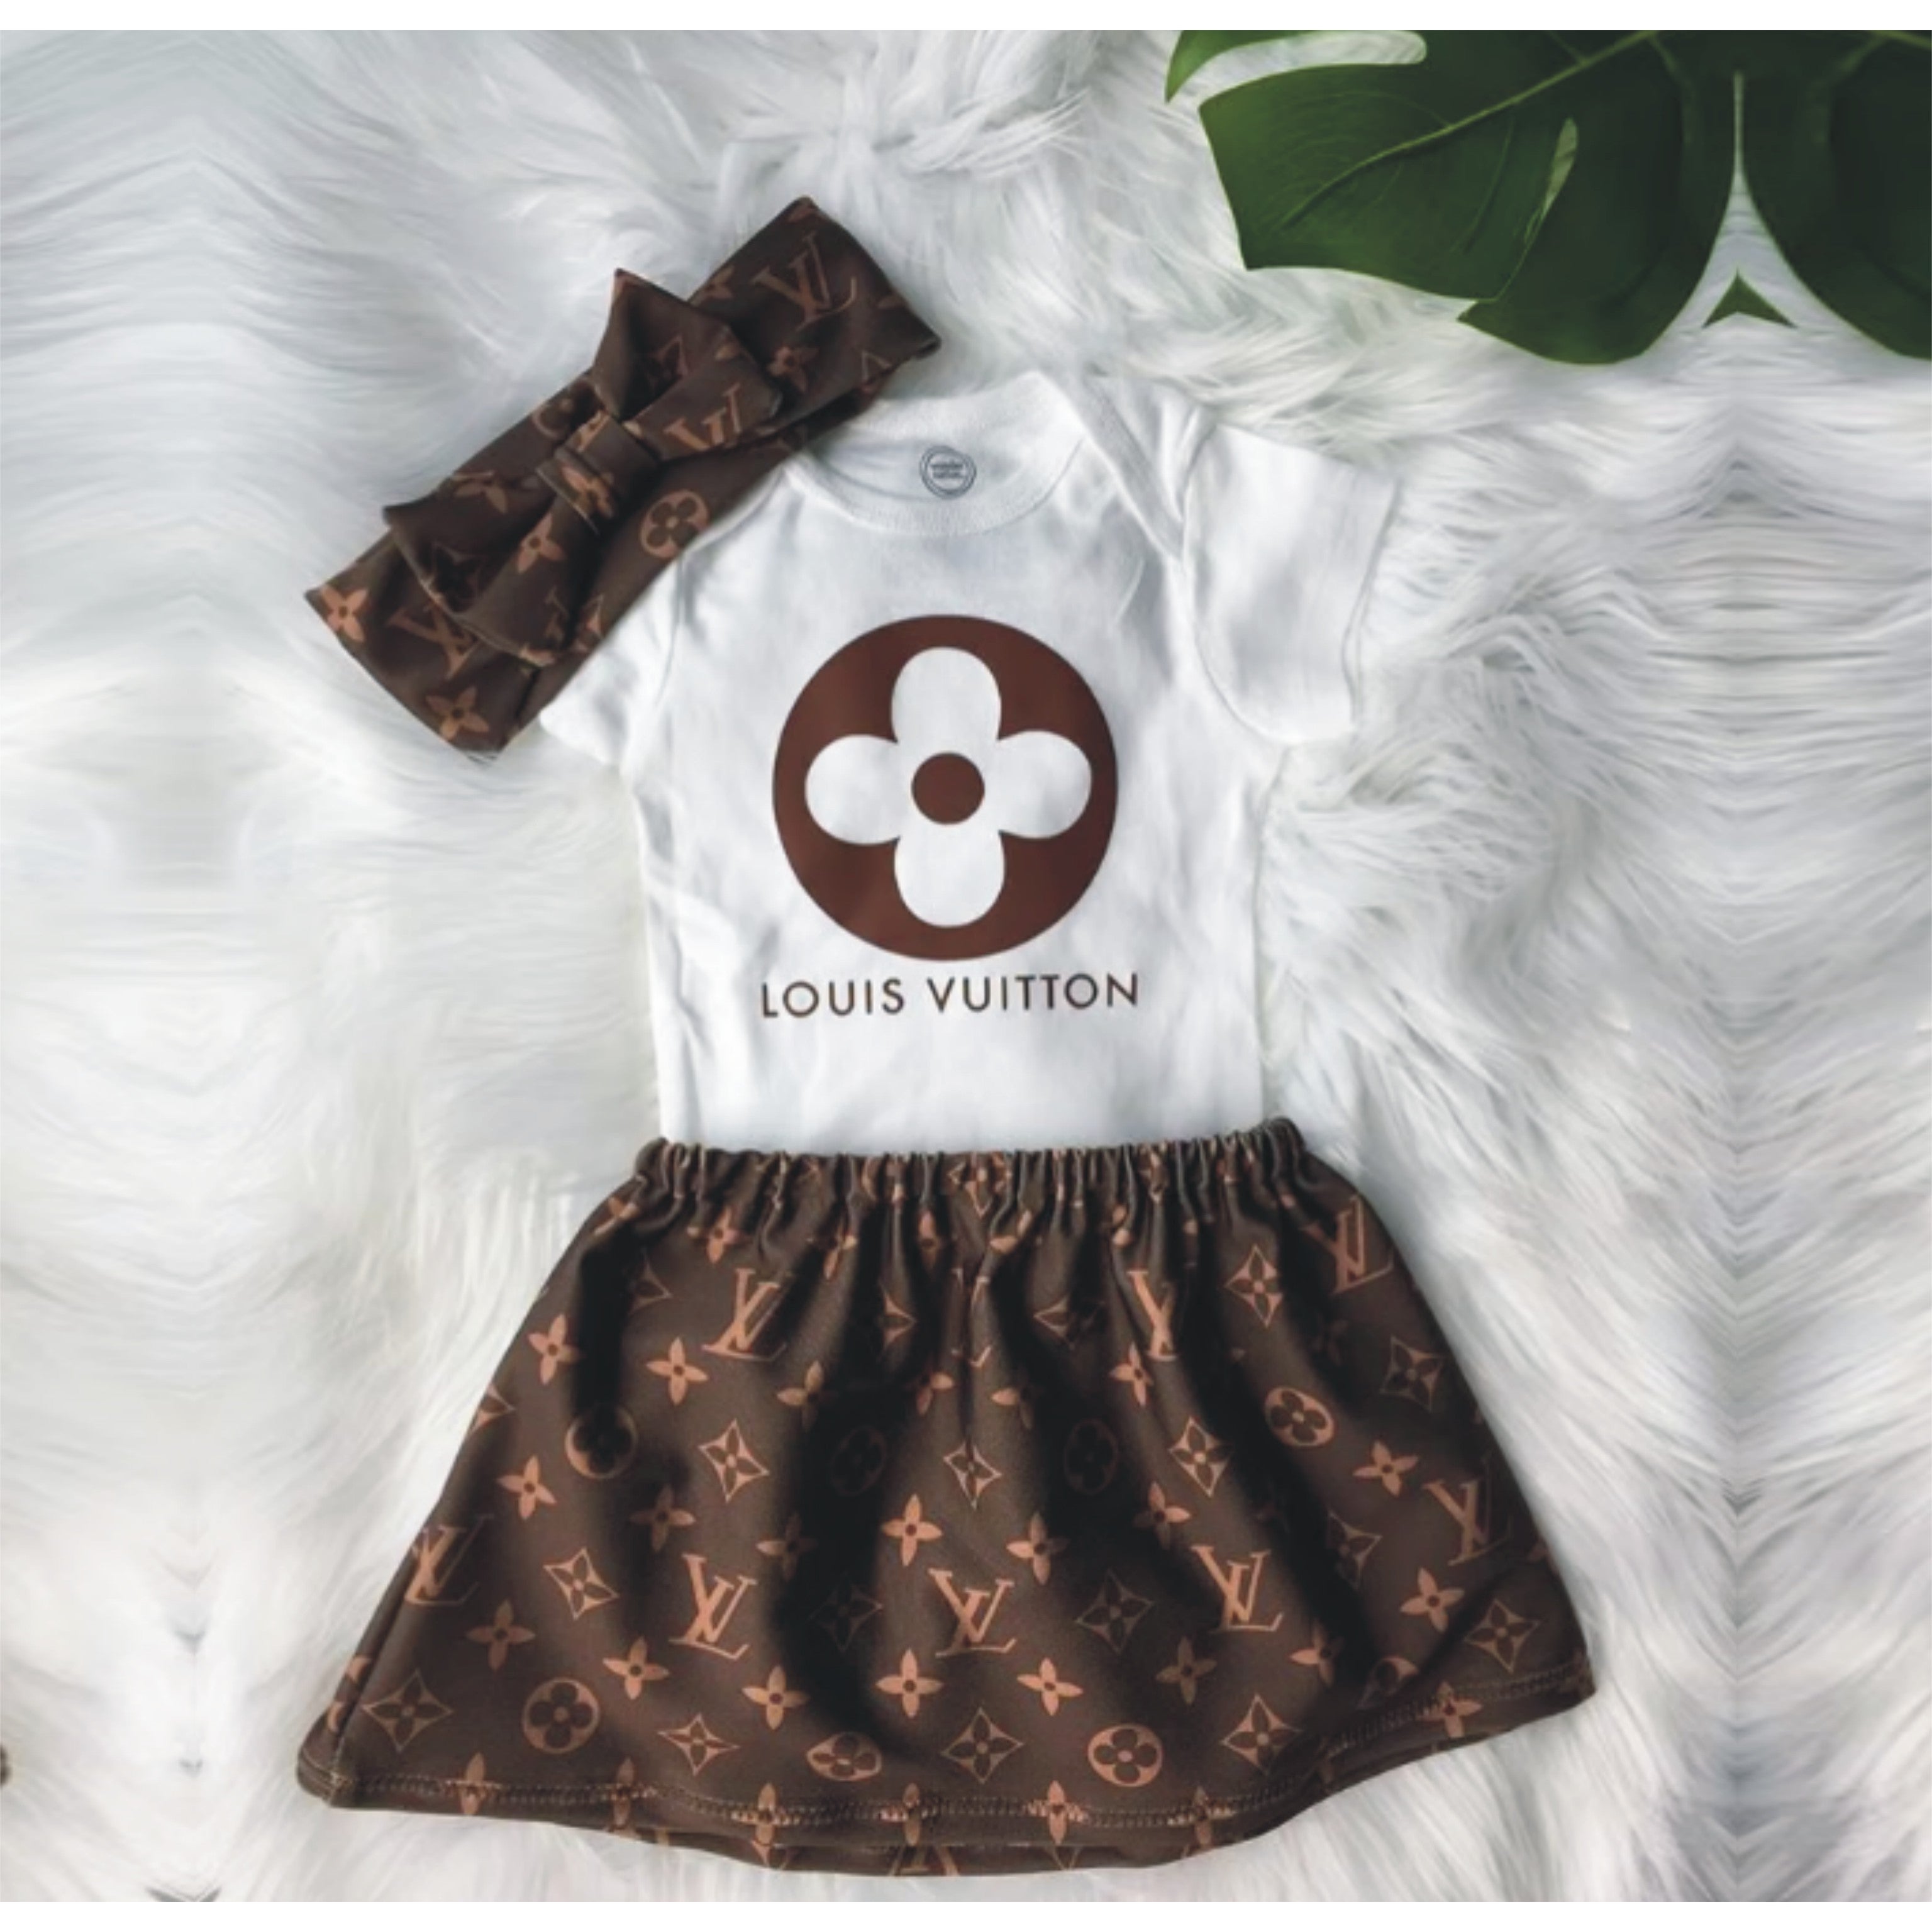 Louis Vuitton Newborn Baby Clothes Factory Sale GET 50 OFF  wwwislandcrematoriumie